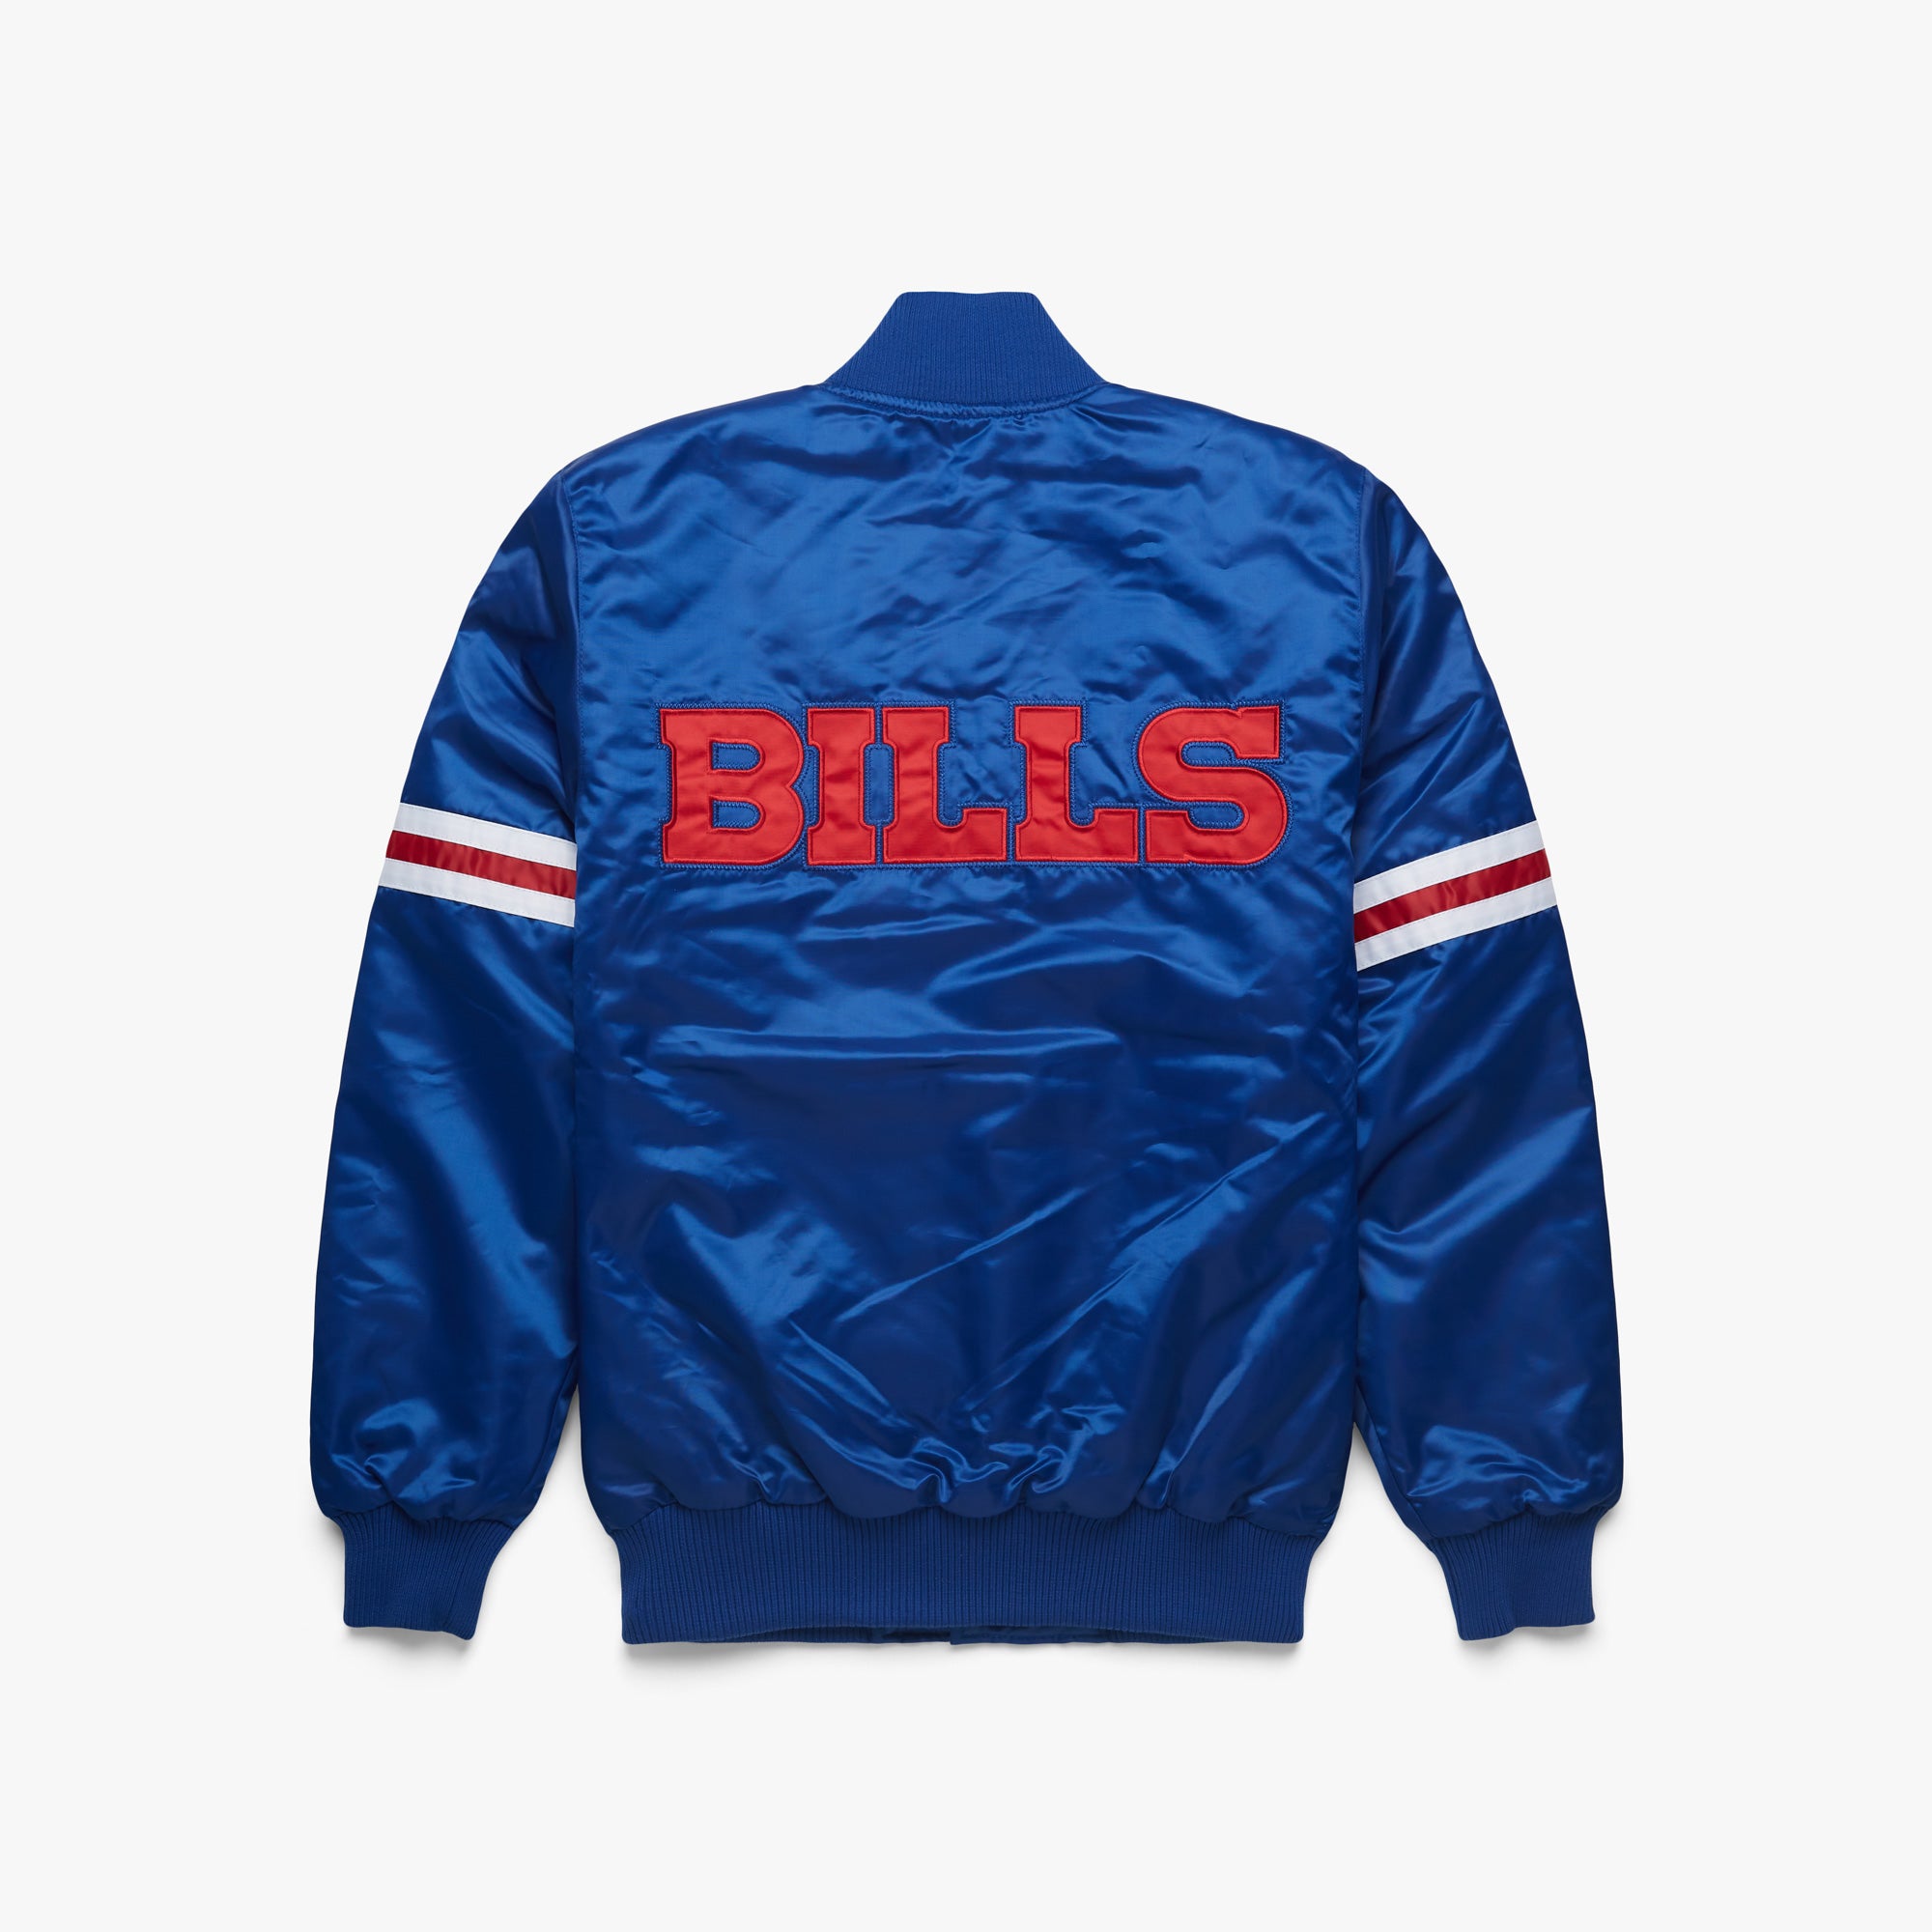 bills retro jacket